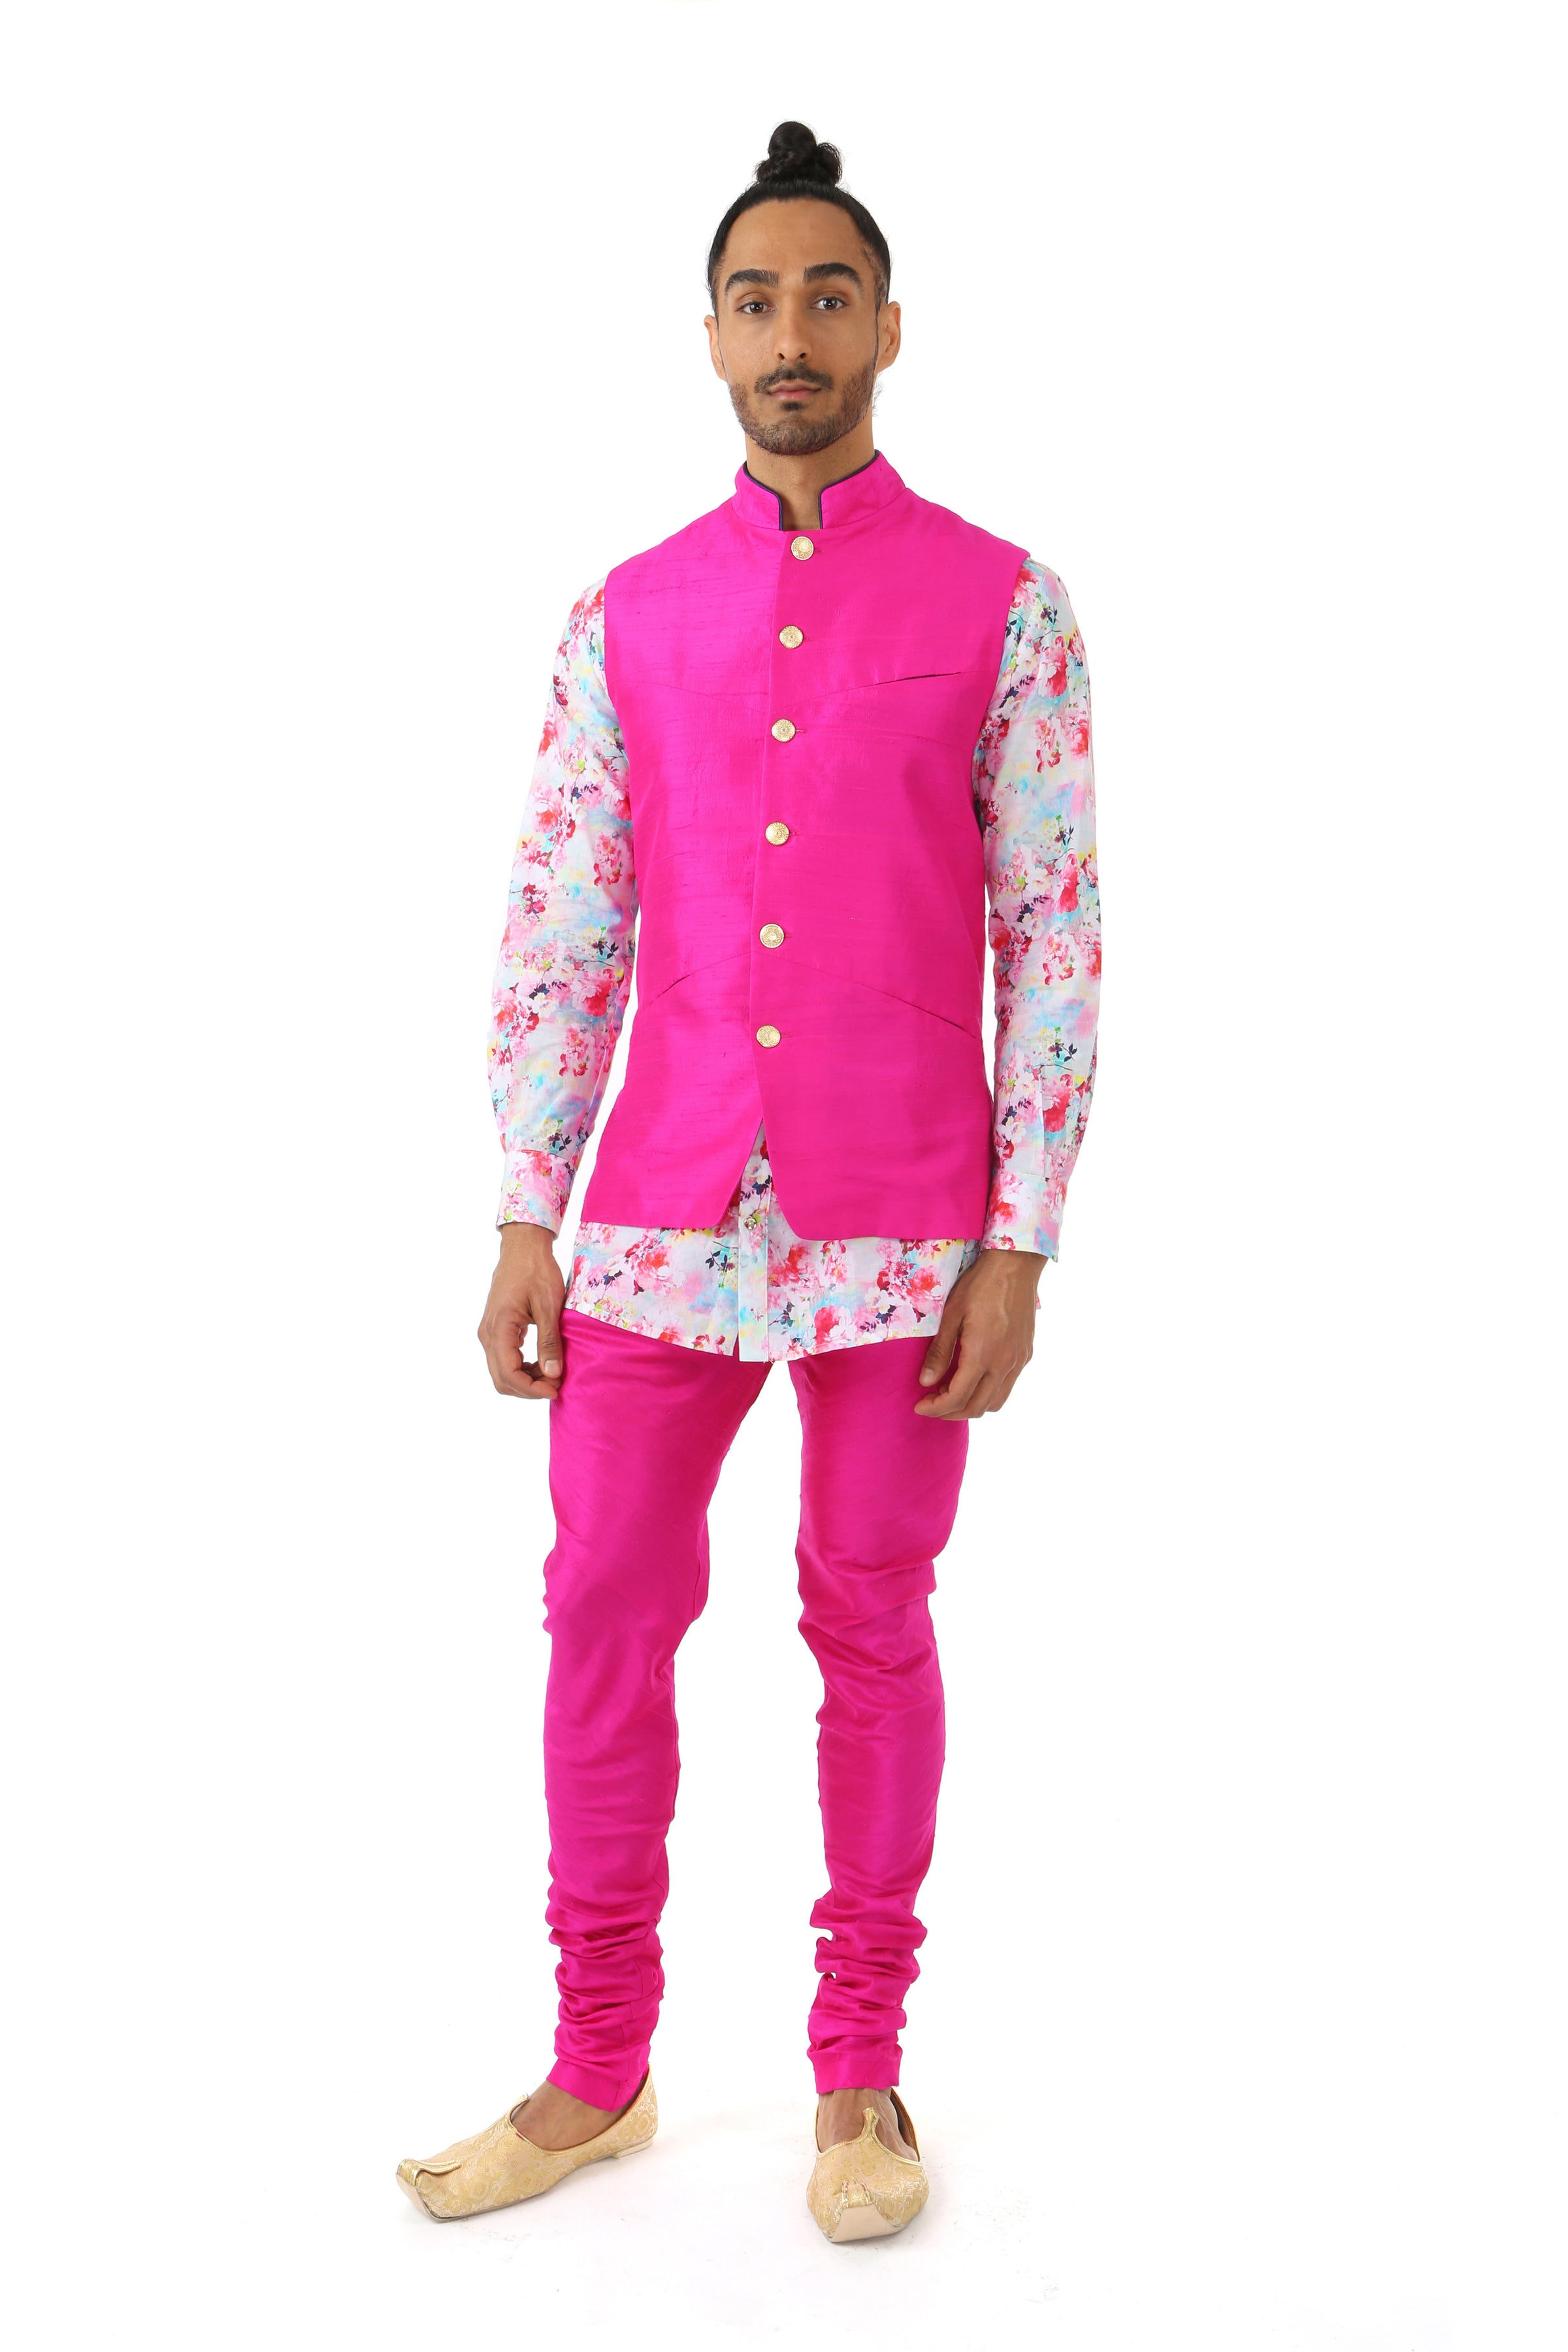 ARJUN Silk Bandi Vest - Front View - Harleen Kaur - South Asian Menswear